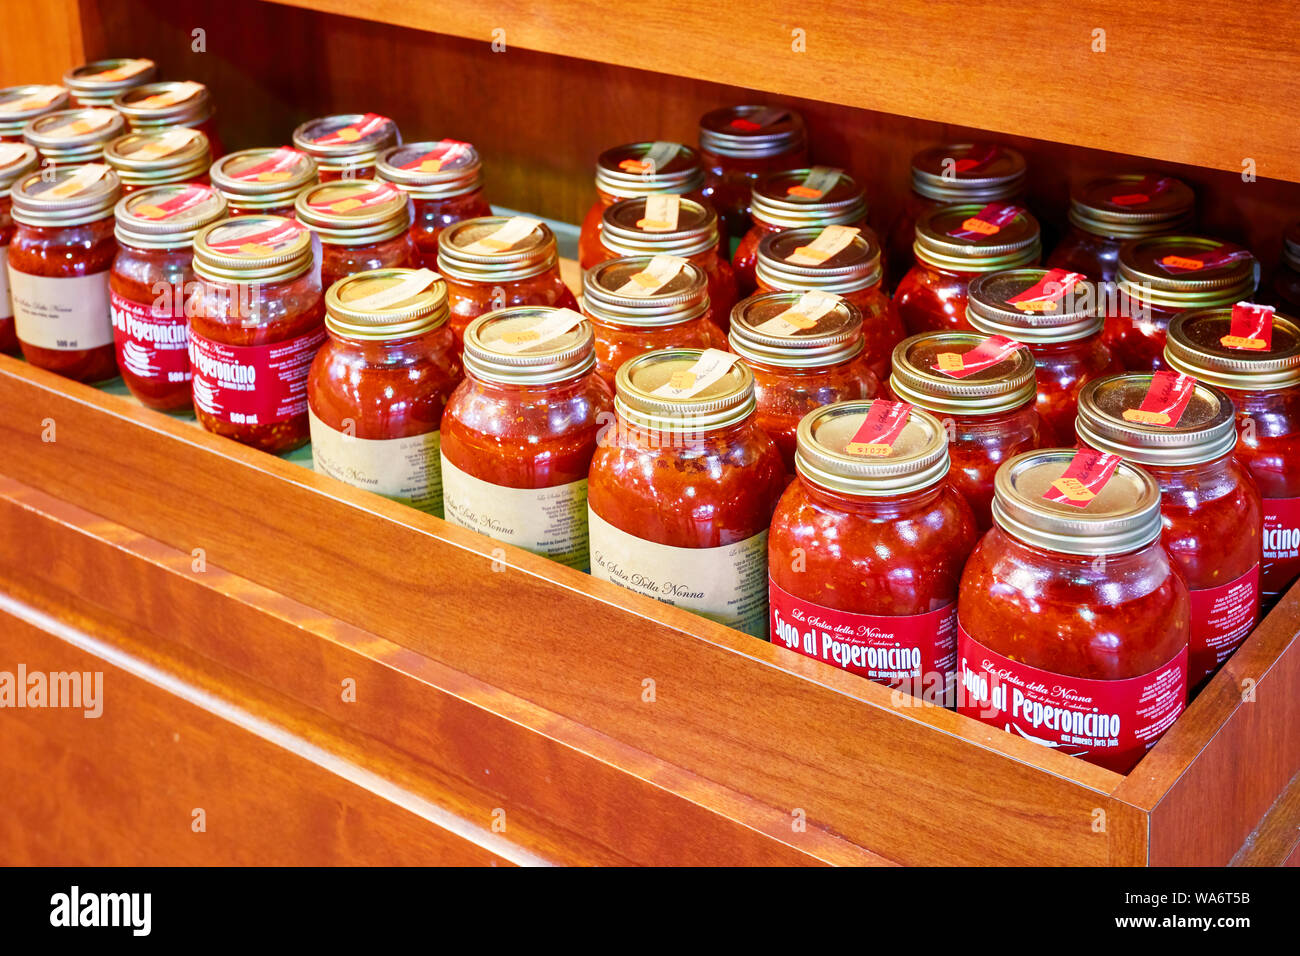 Tomato basil oil sauce and chili sauce jars on the wooden market shelf. Stock Photo